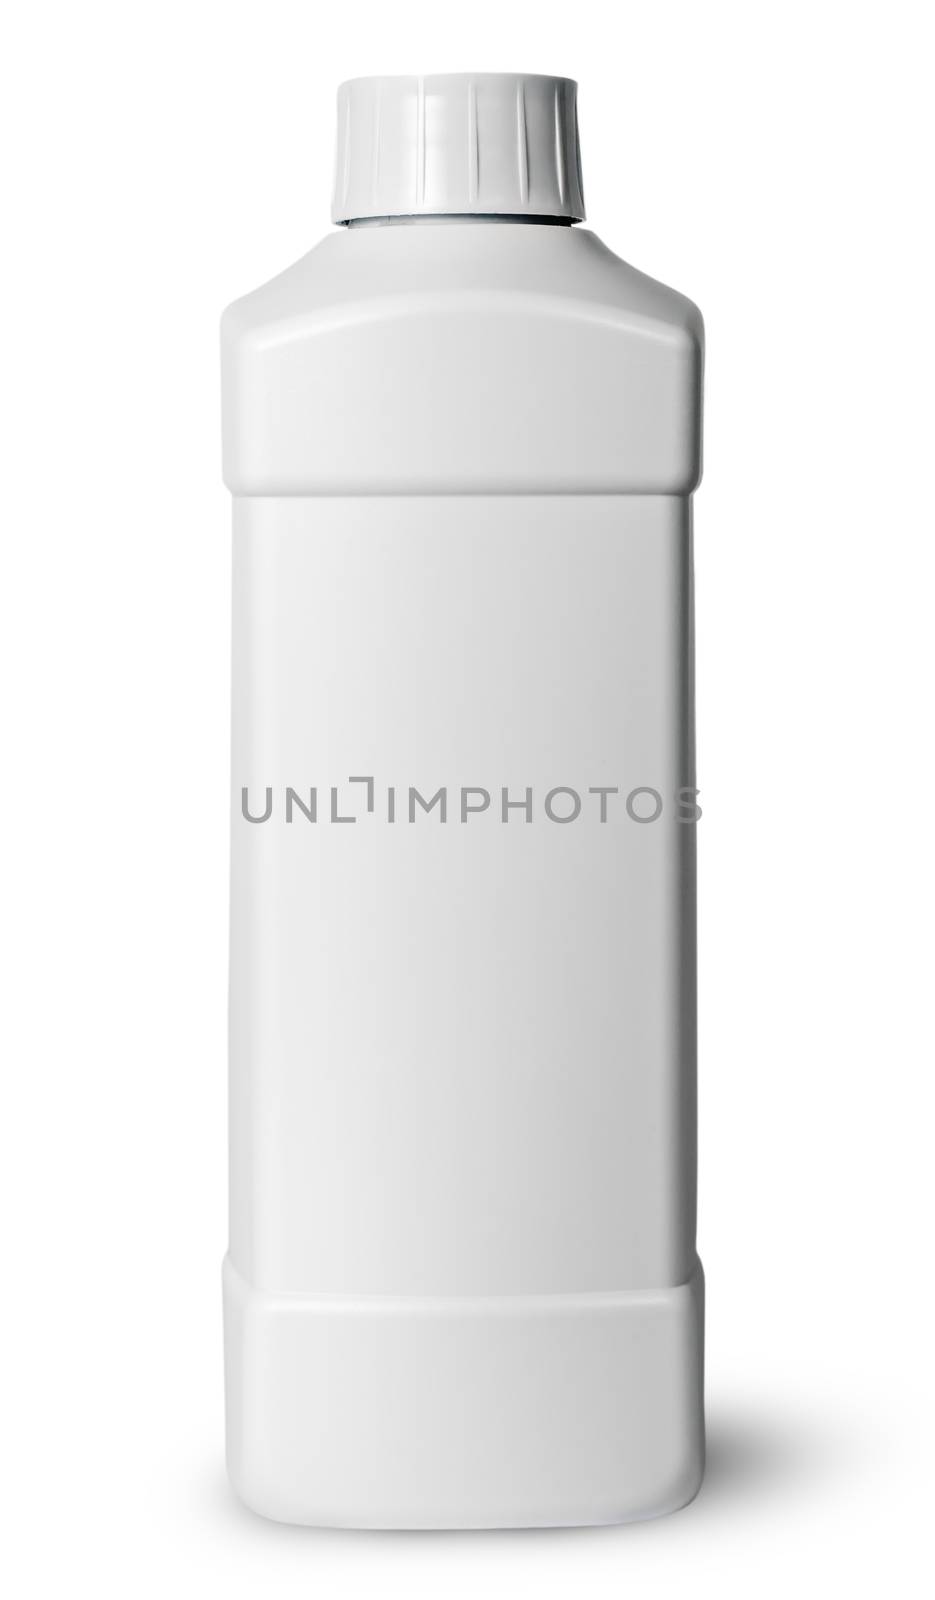 White plastic bottle of detergent isolated on white background